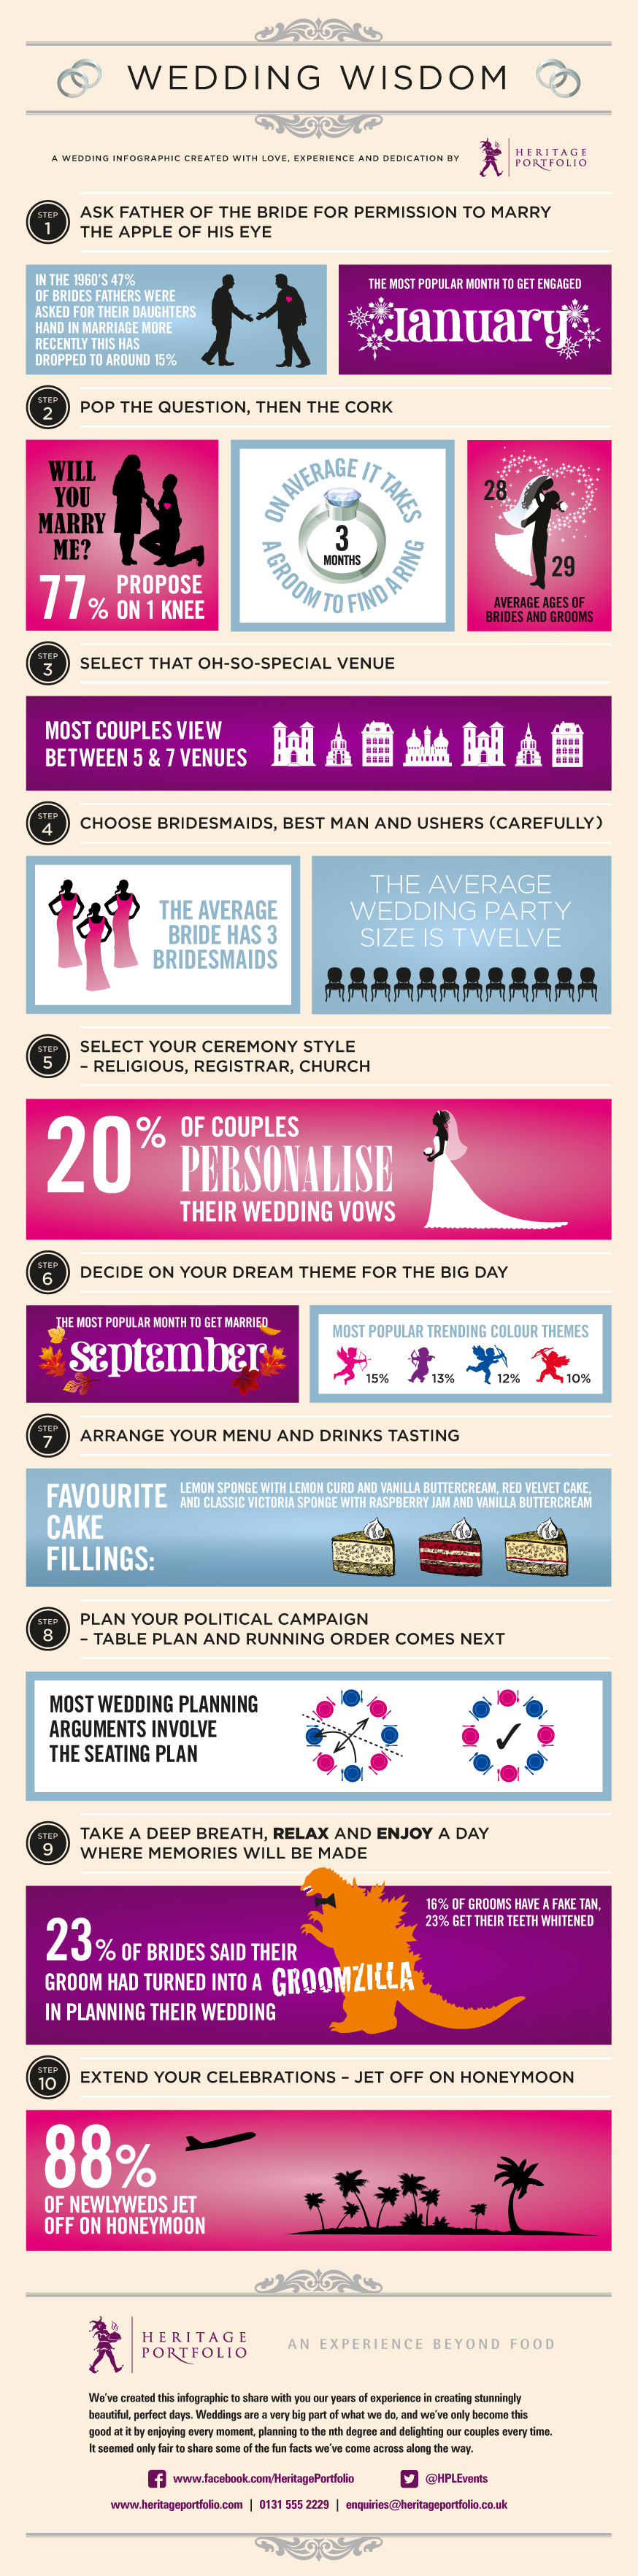 Wedding wisdom infographic